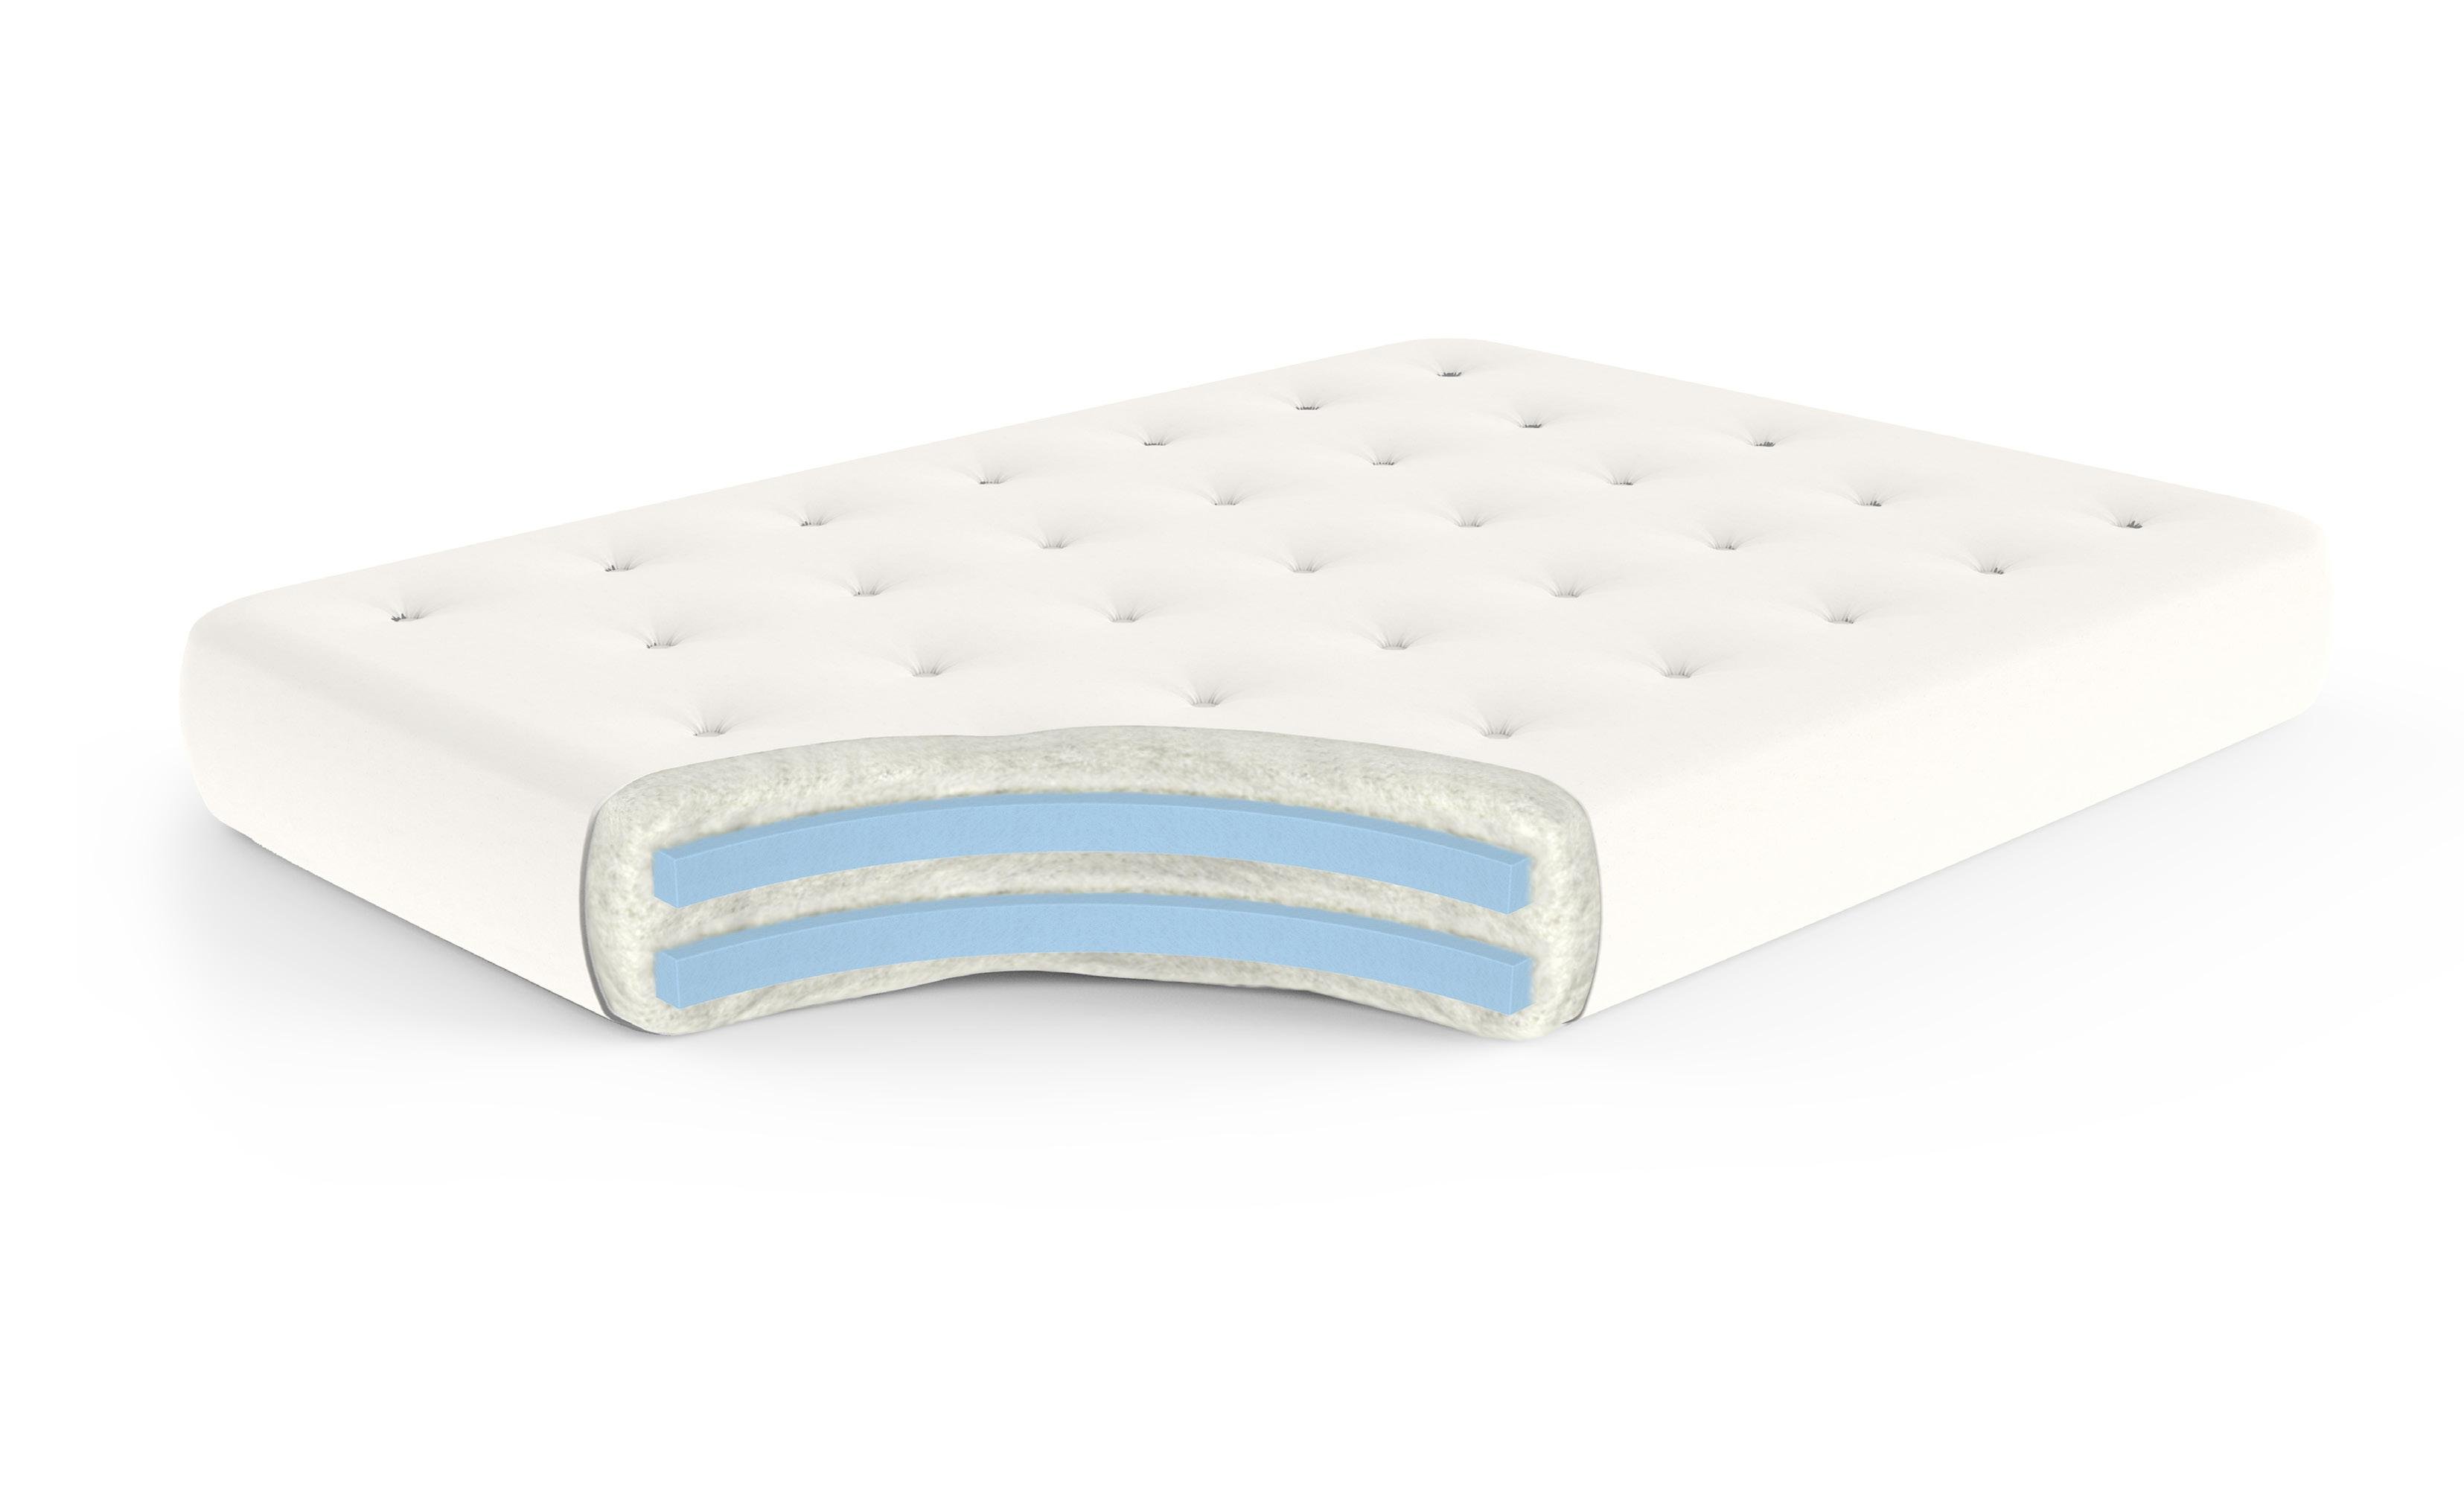 double foam mattress fantastic furniture